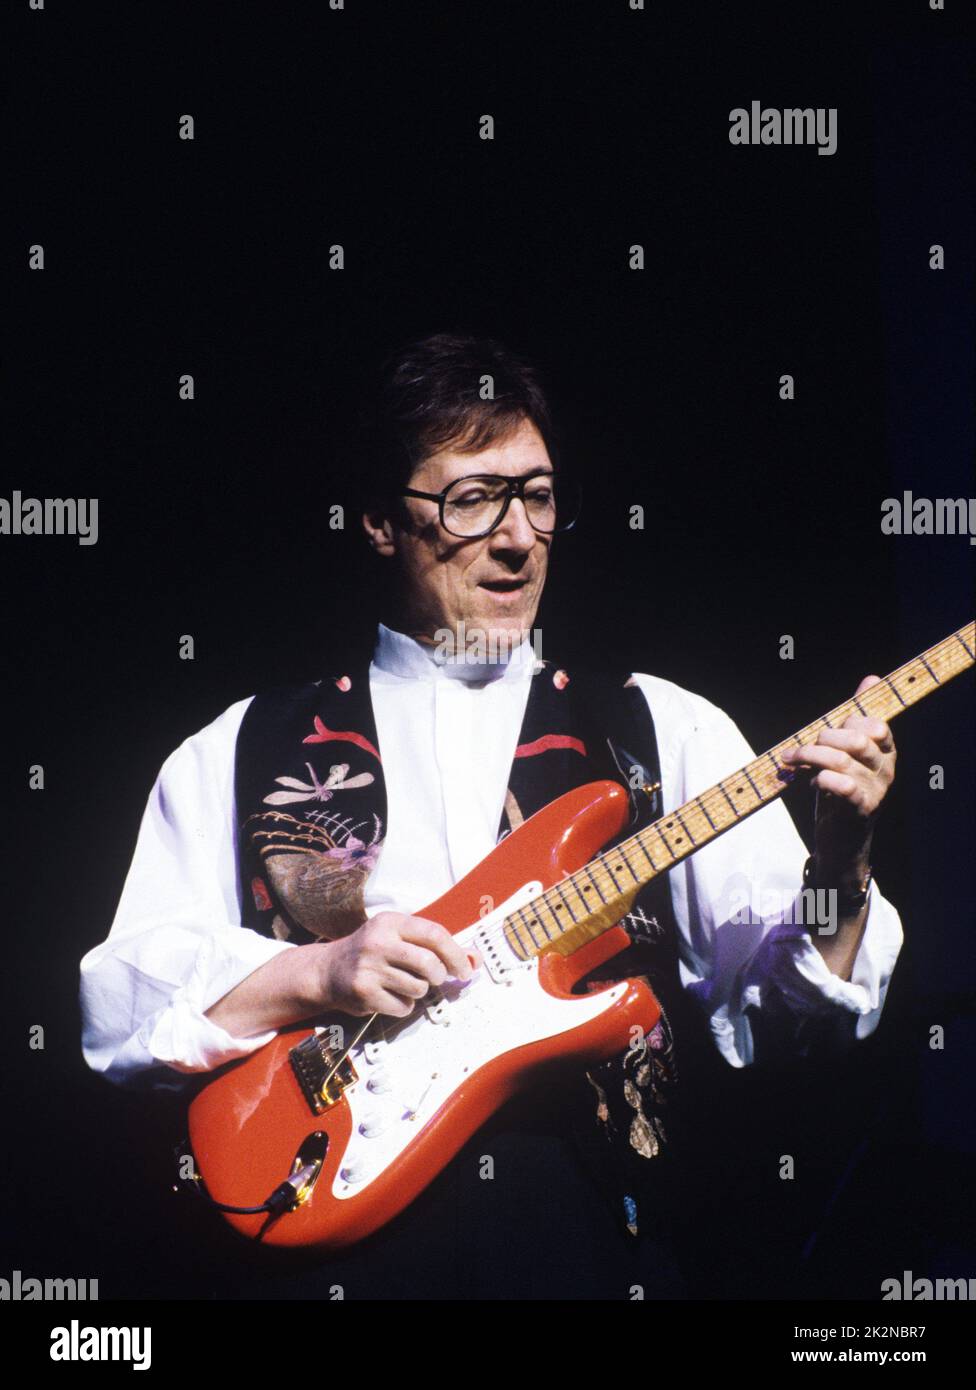 HANK MARVIN ; live in der Royal Albert Hall, London, UK ; 20. November 1995 ; Credit : Mel Longhurst / Performing Arts Images ; www.performingartsimages.com Stockfoto